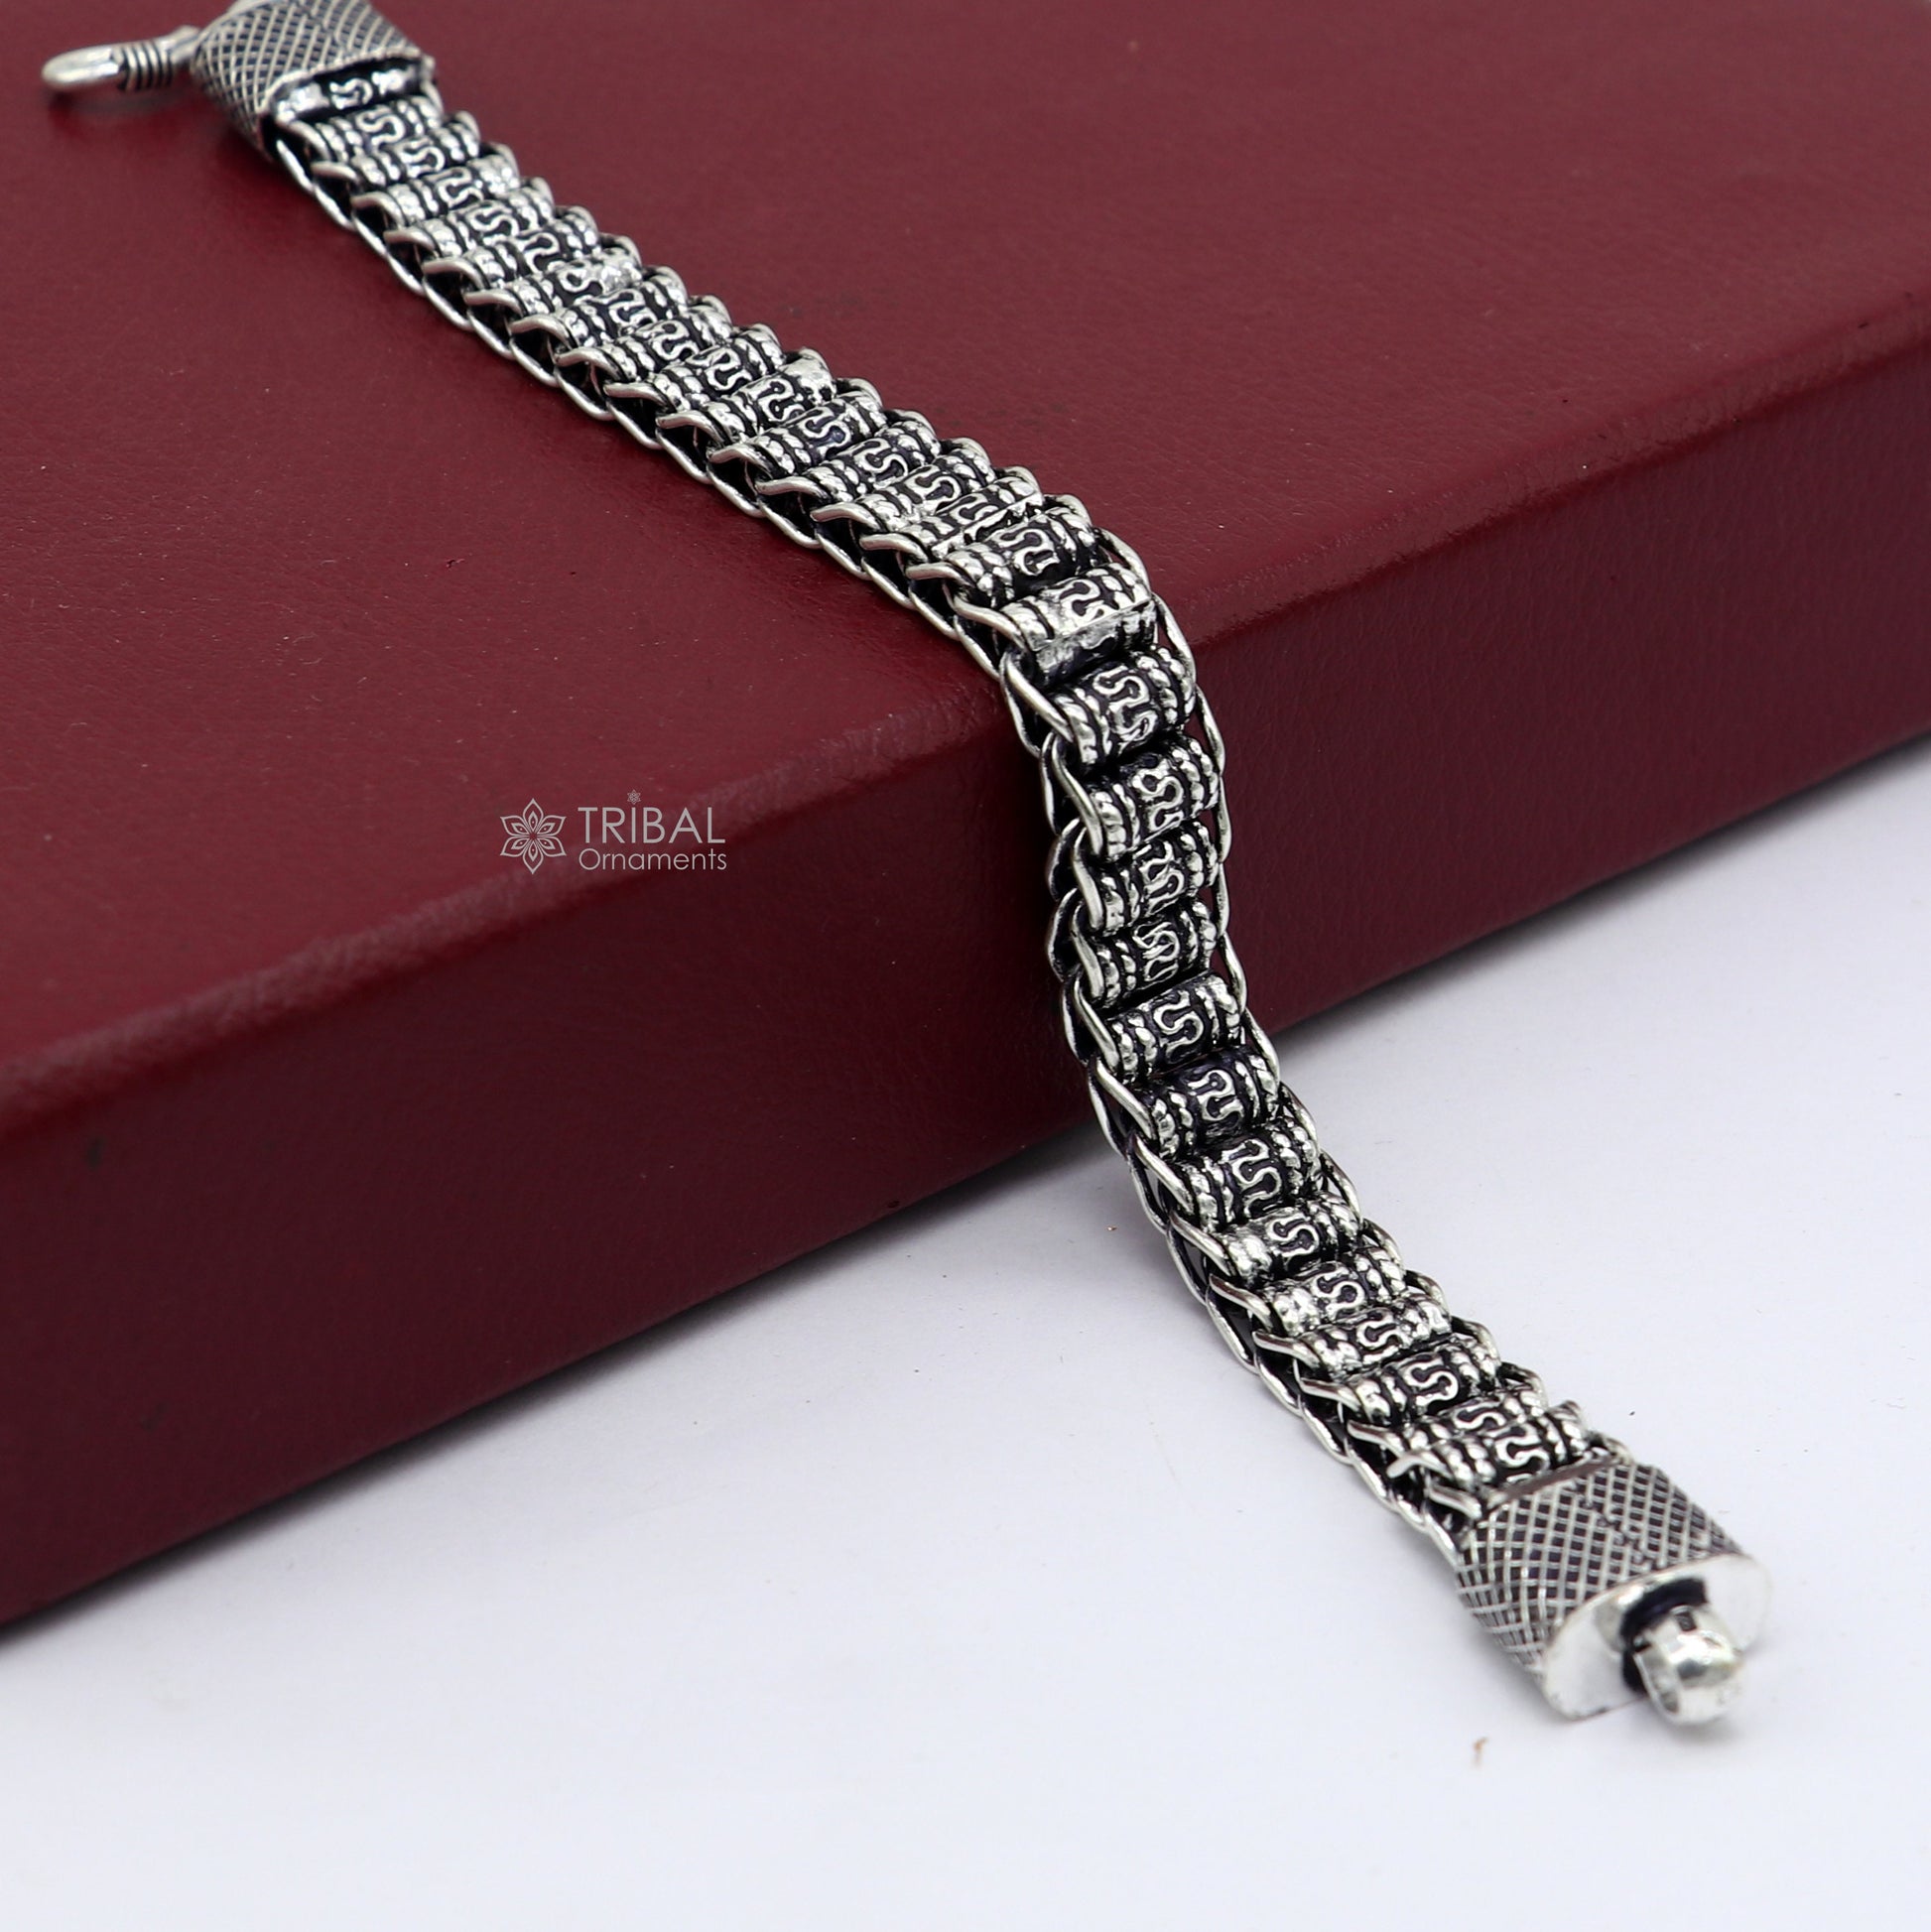 11mm  925 sterling silver handmade amazing rolar bracelet chain flexible men's bracelet jewelry from Rajasthan india sbr732 - TRIBAL ORNAMENTS